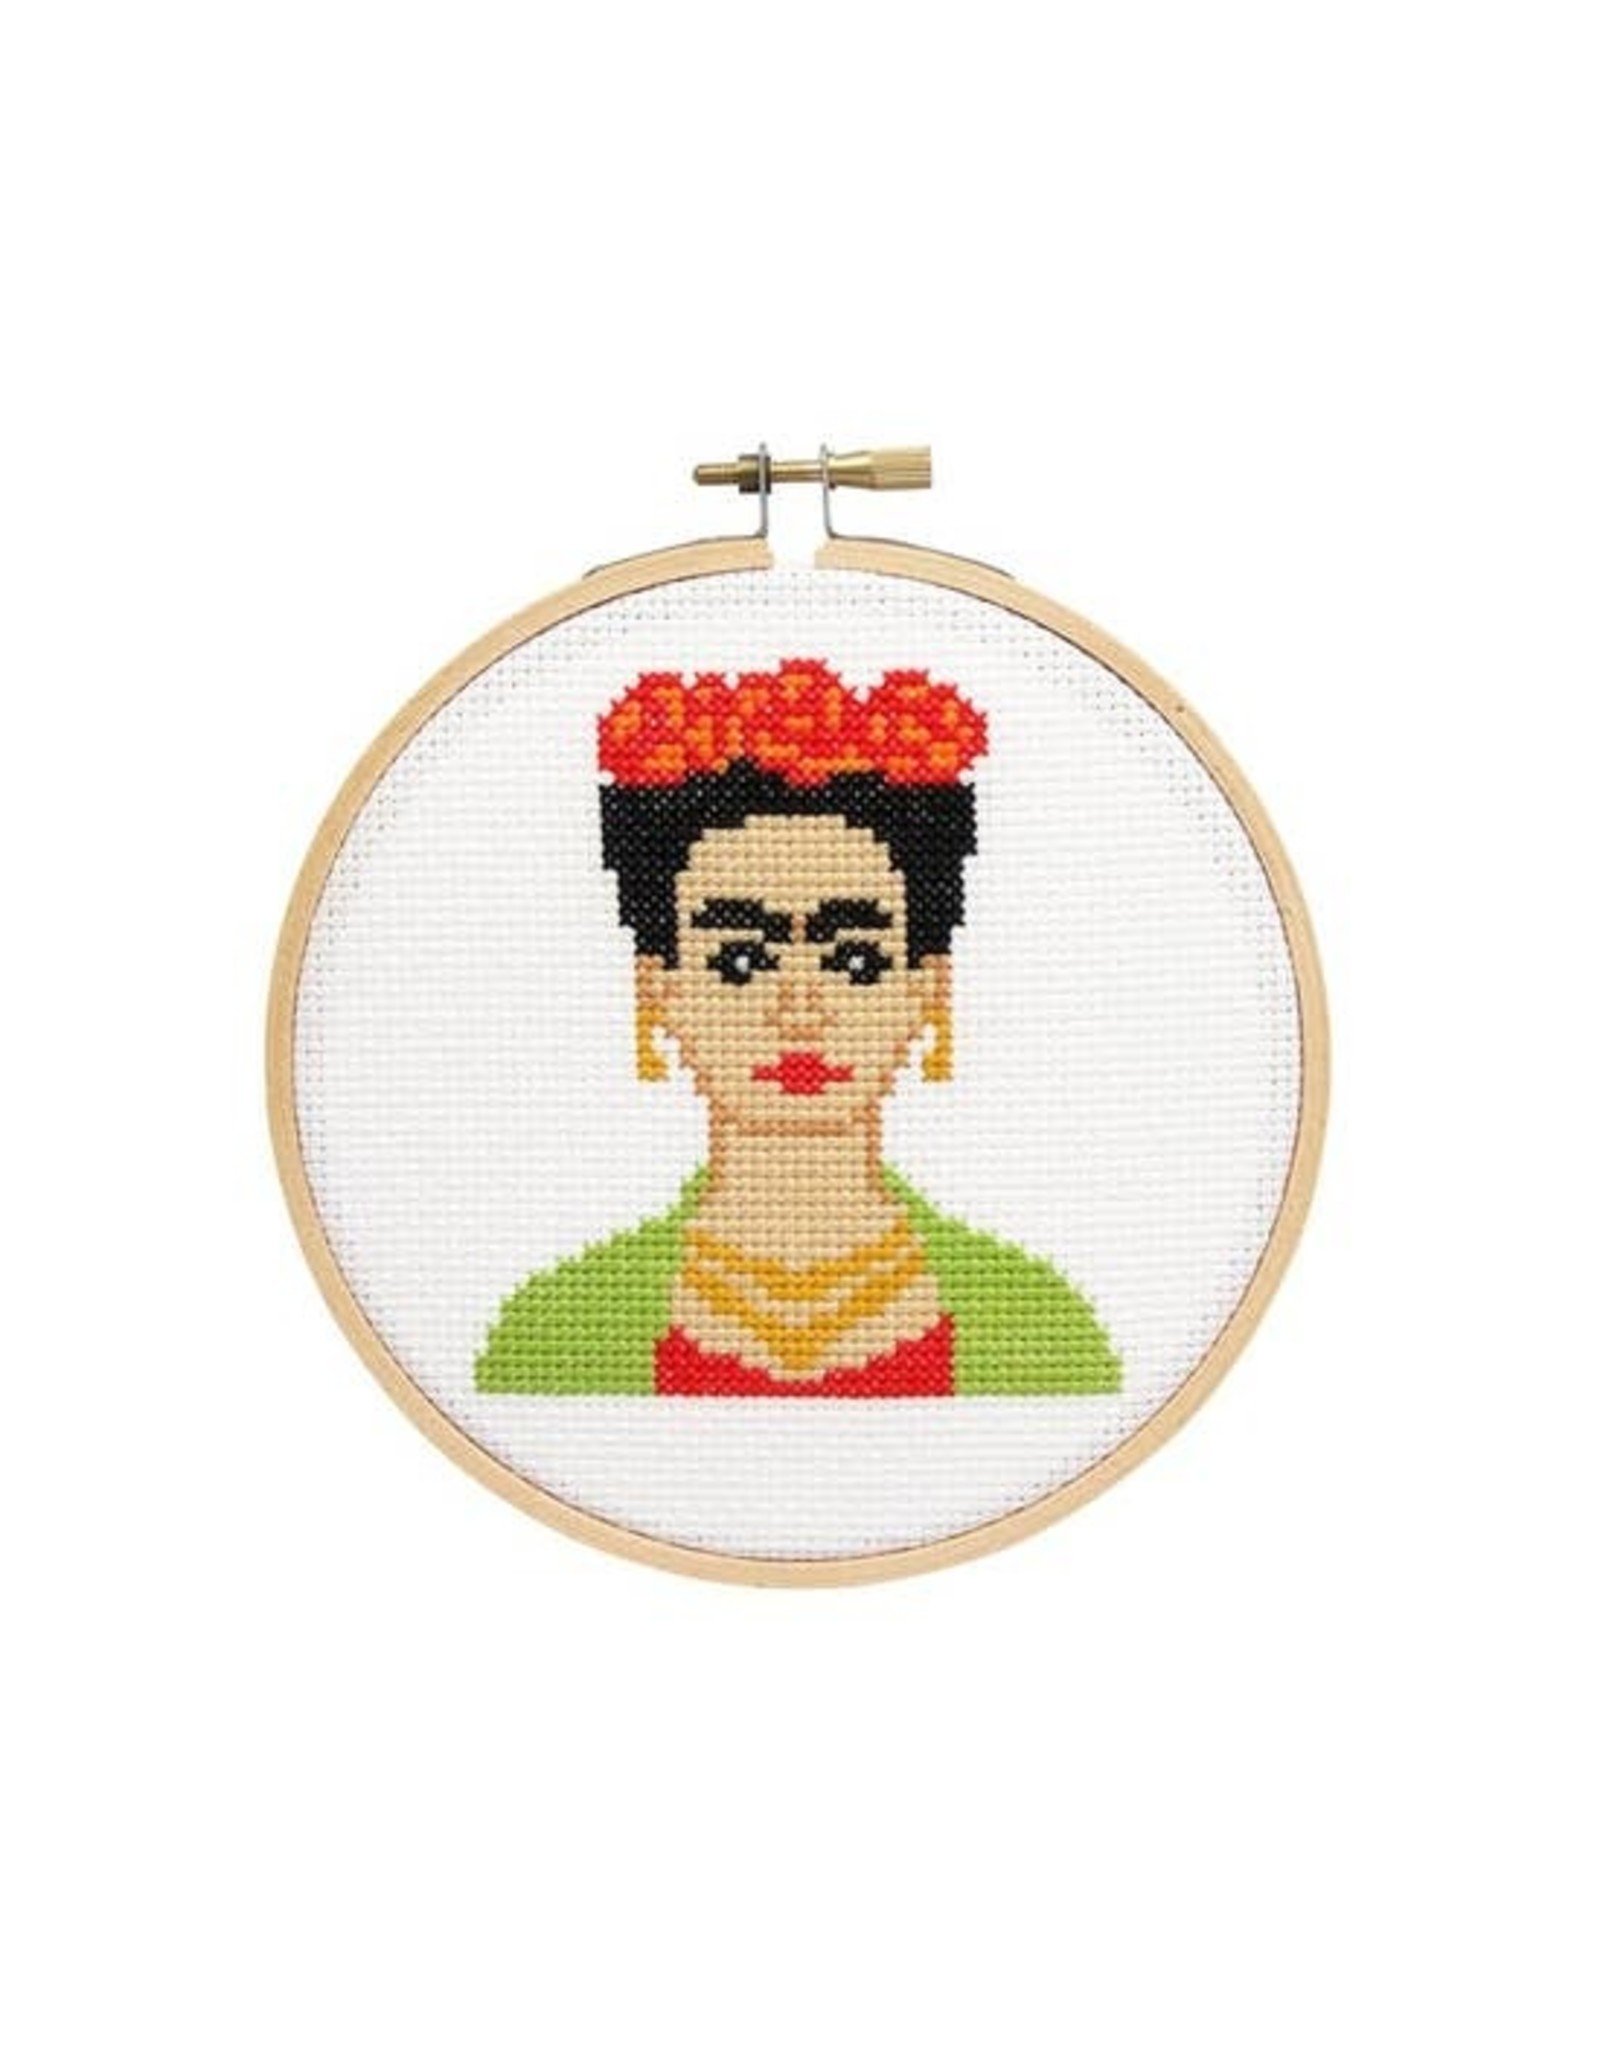 The Stranded Stitch Frida Cross Stitch Kit